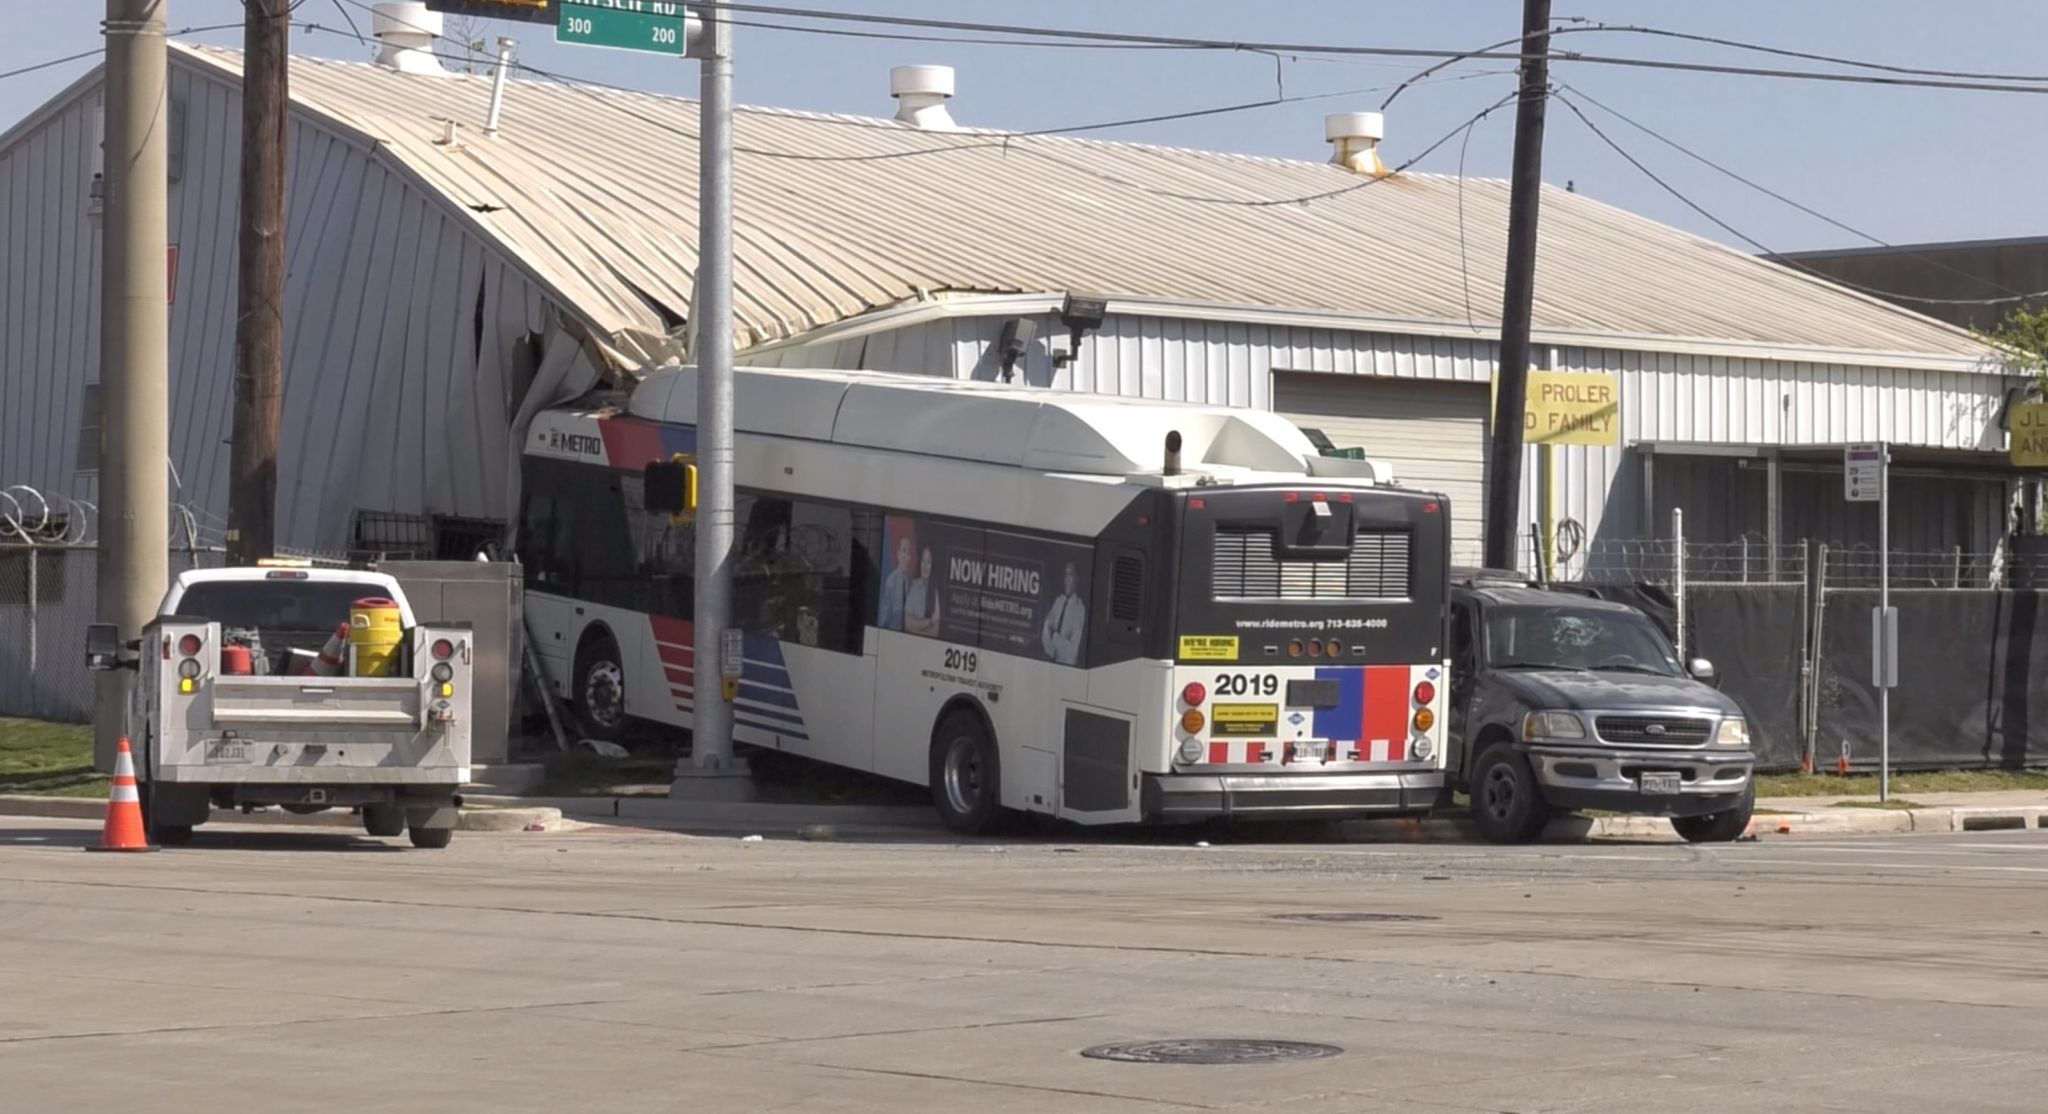 2 hurt as Metro bus crashes into building in east Houston - Houston Chronicle